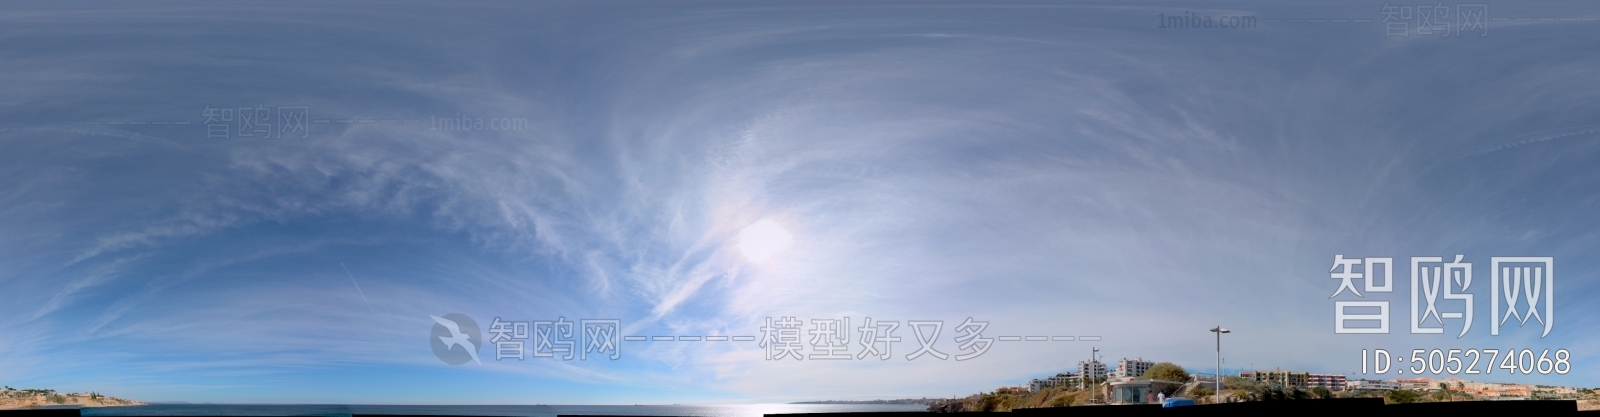 天空HDR贴图